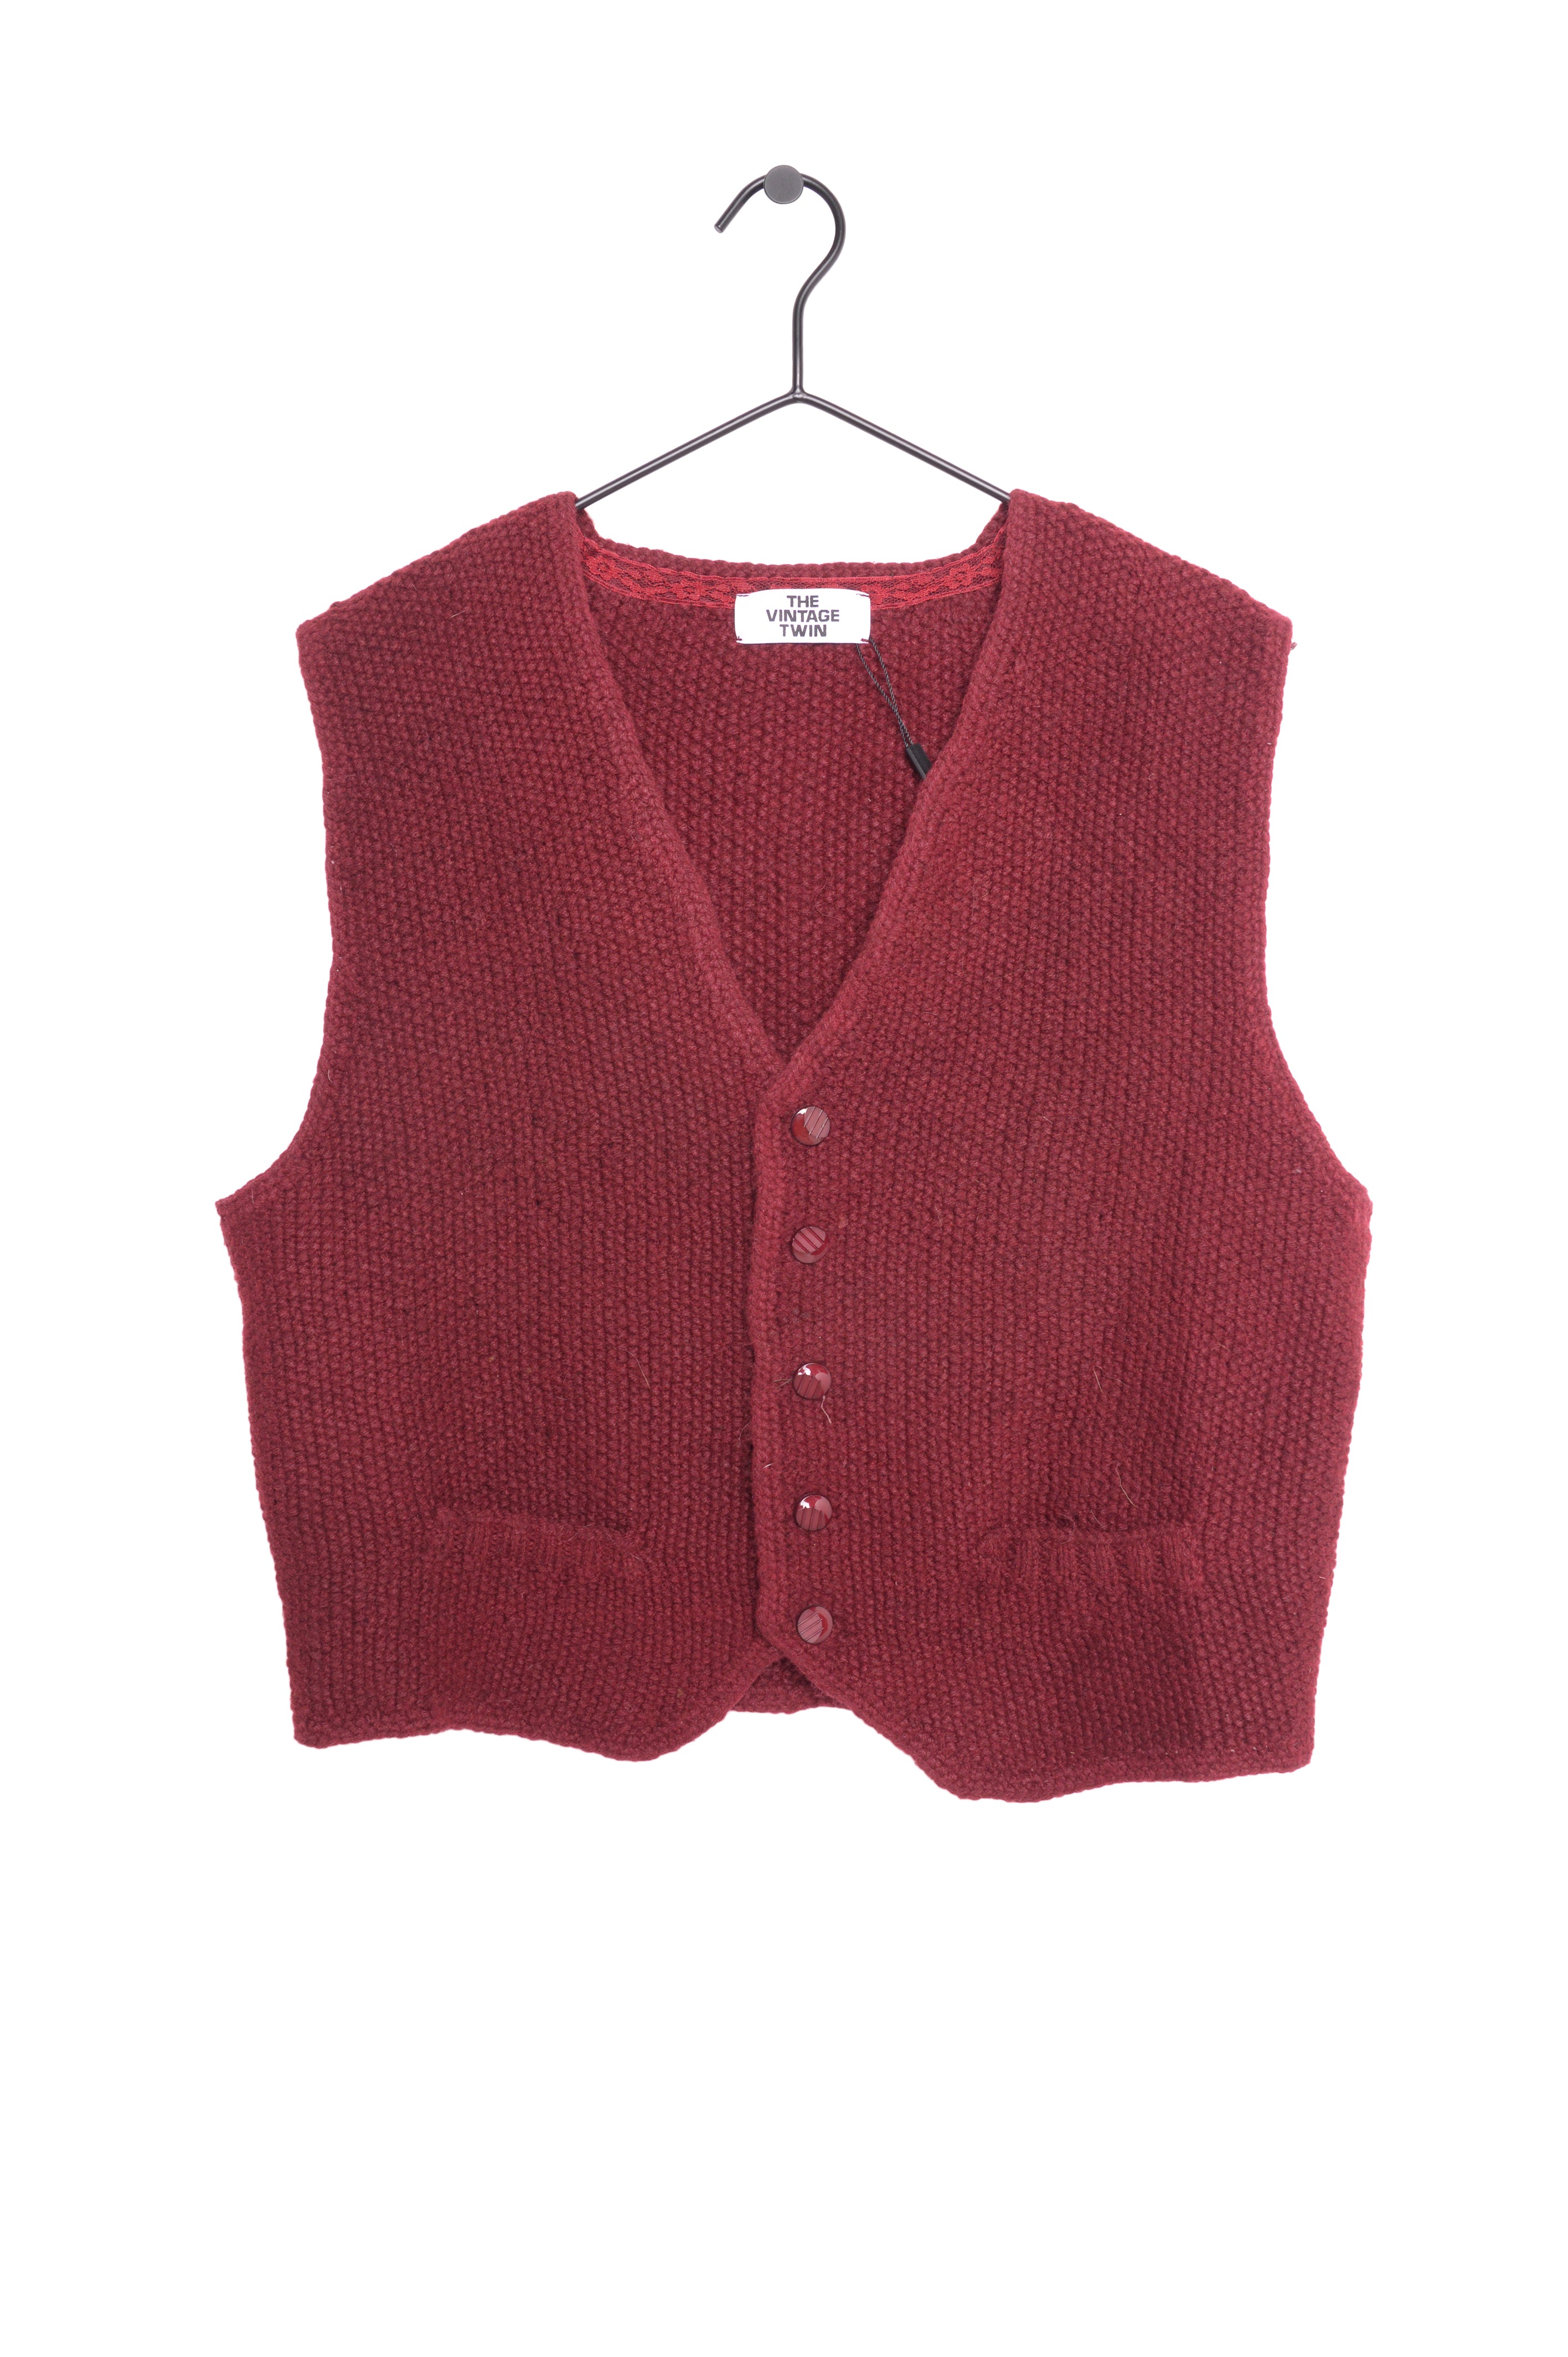 Handmade Sweater Vest, Hand Knit Sleeveless Sweater, Wool